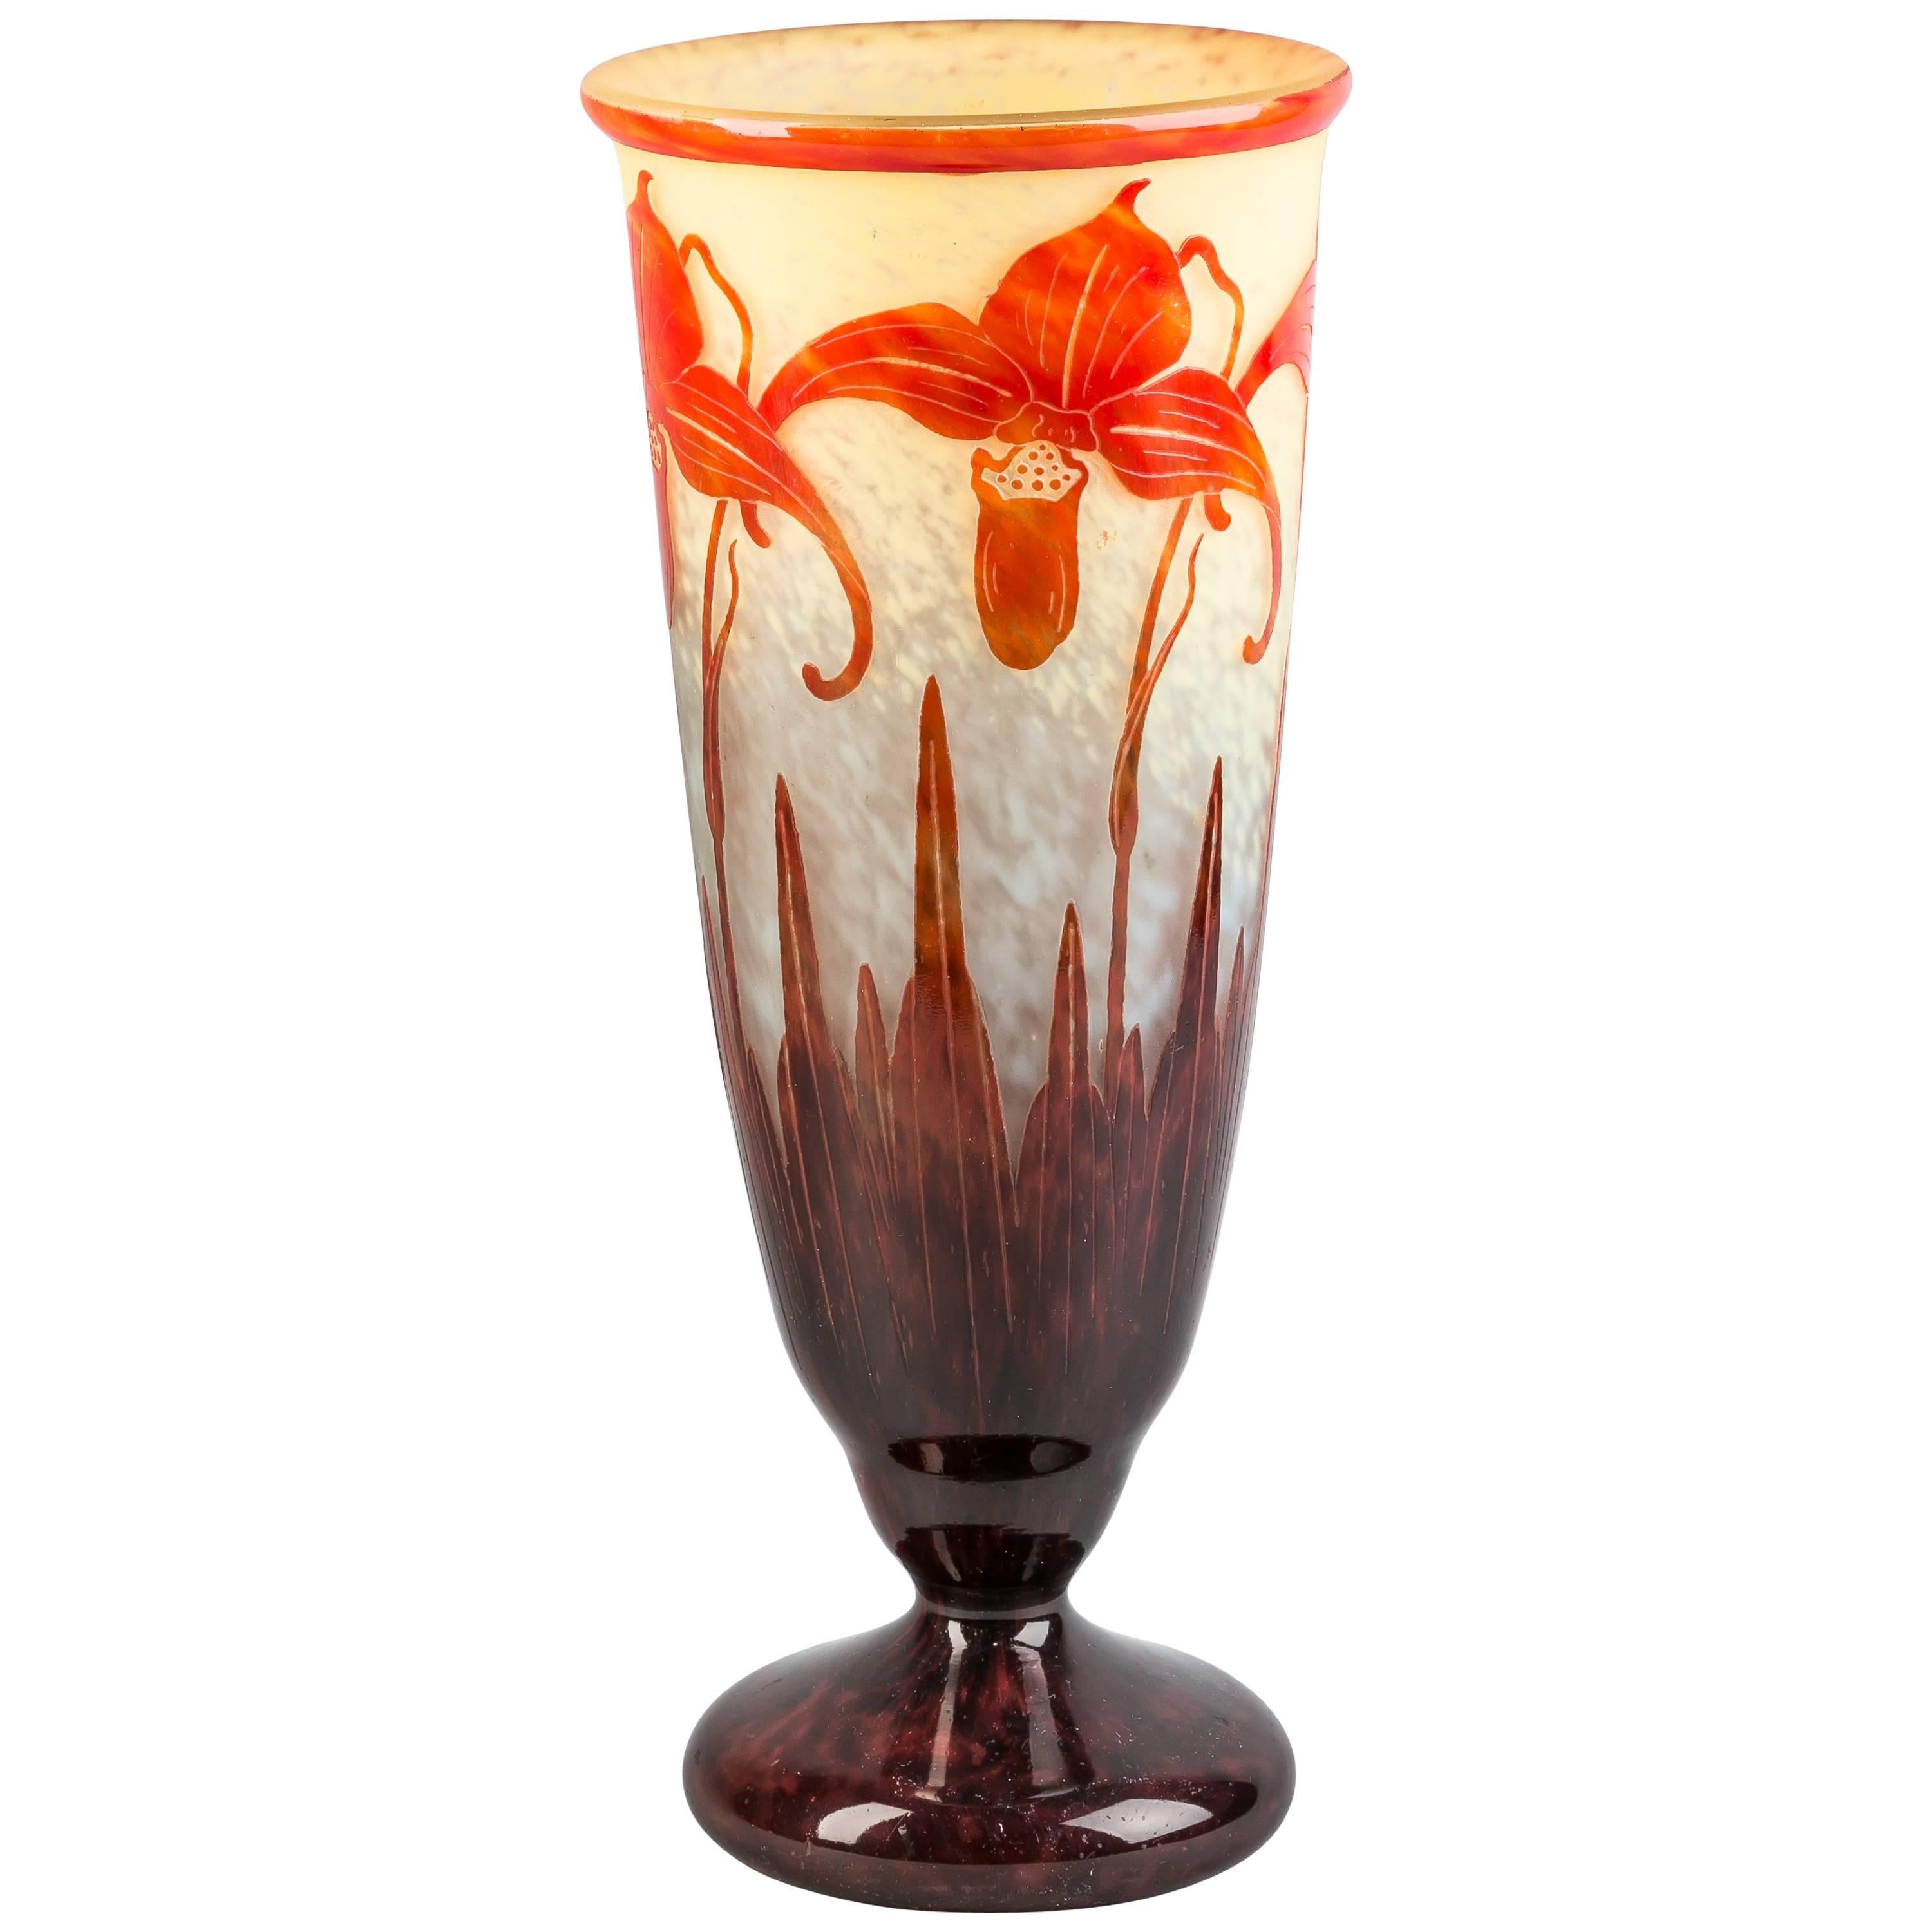 Le Verre Francais Glass Vase, circa 1910